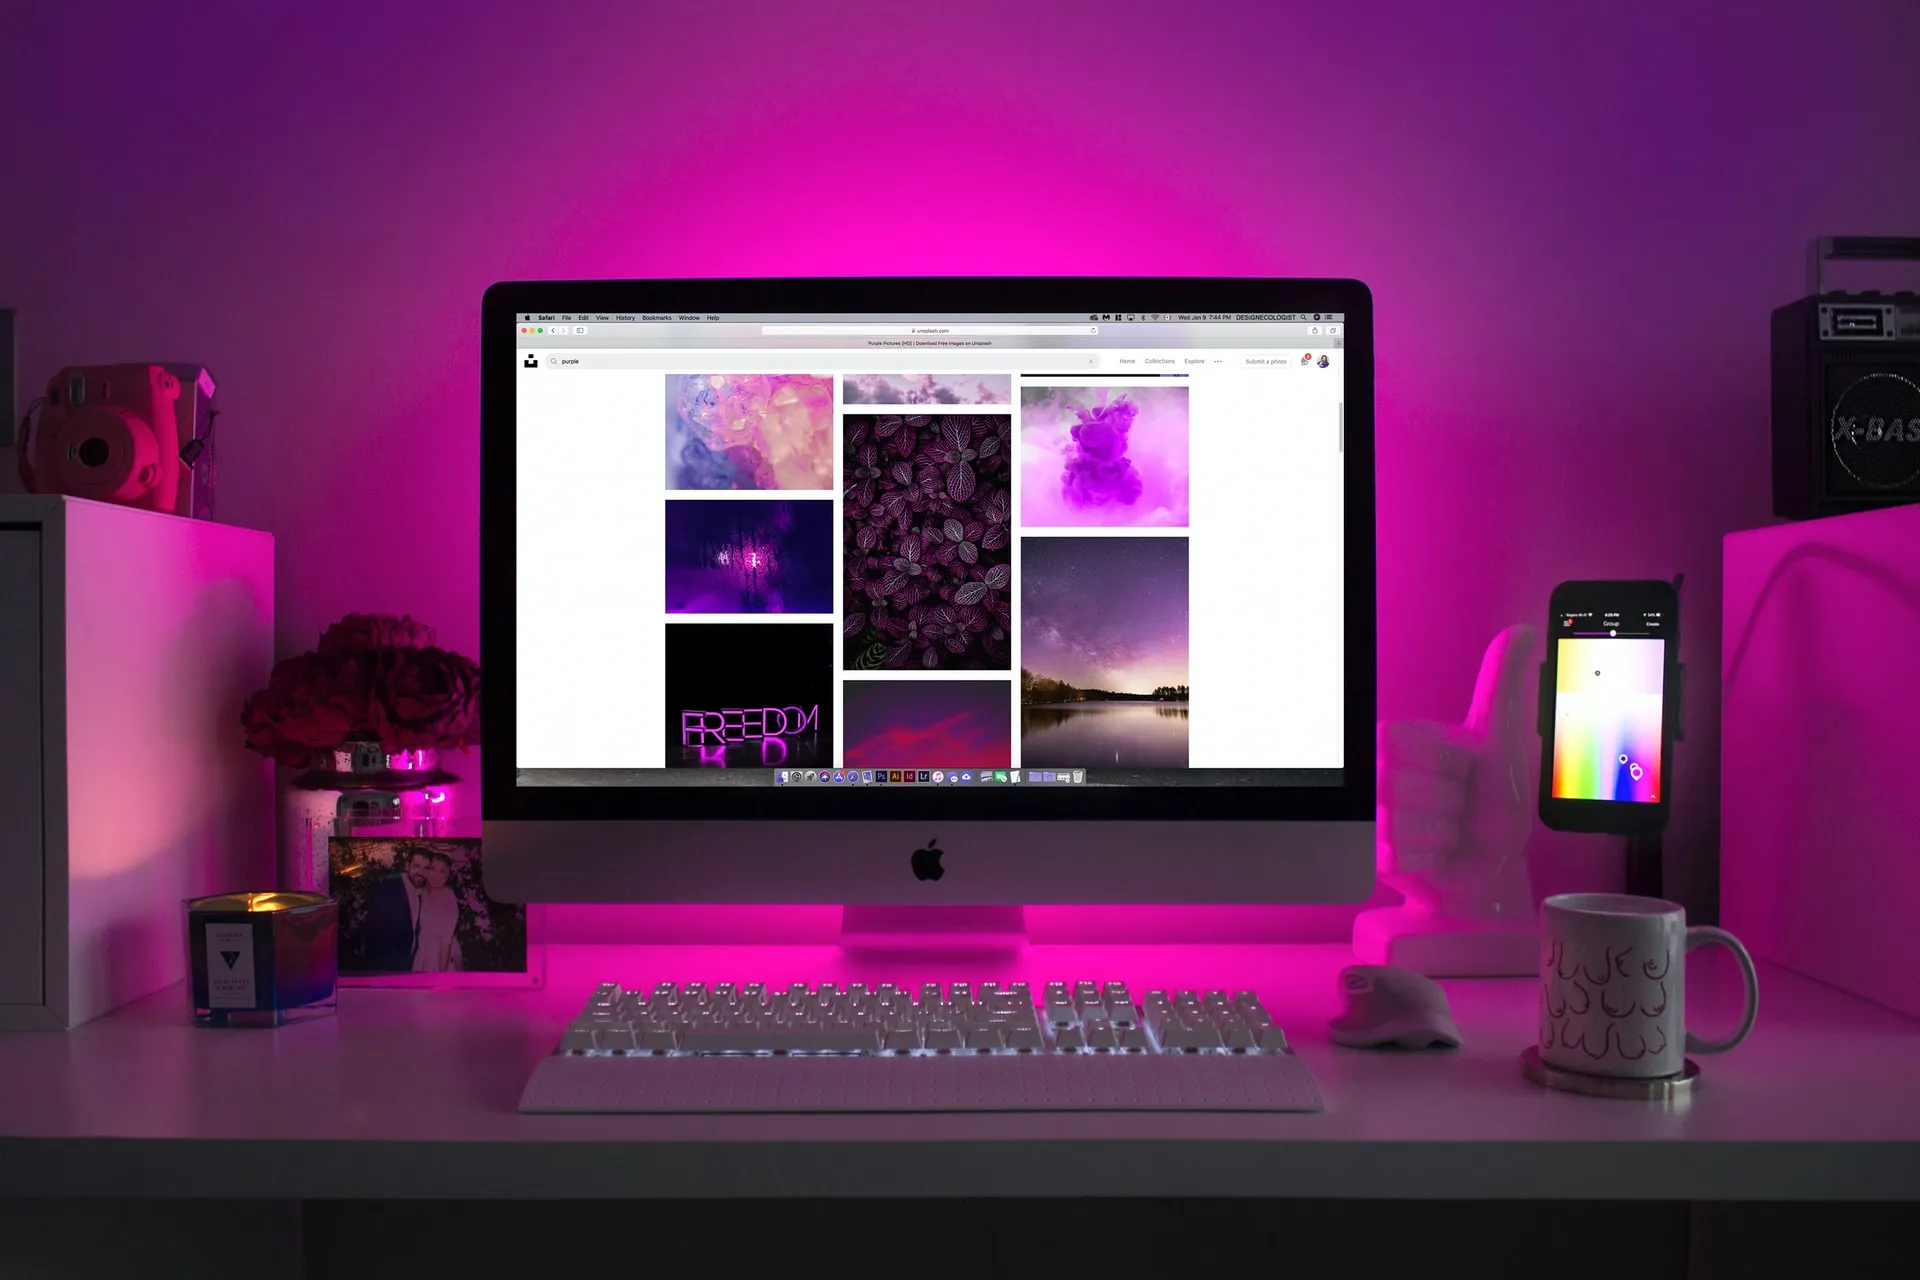 Imac computer on a desk with pink LED lights